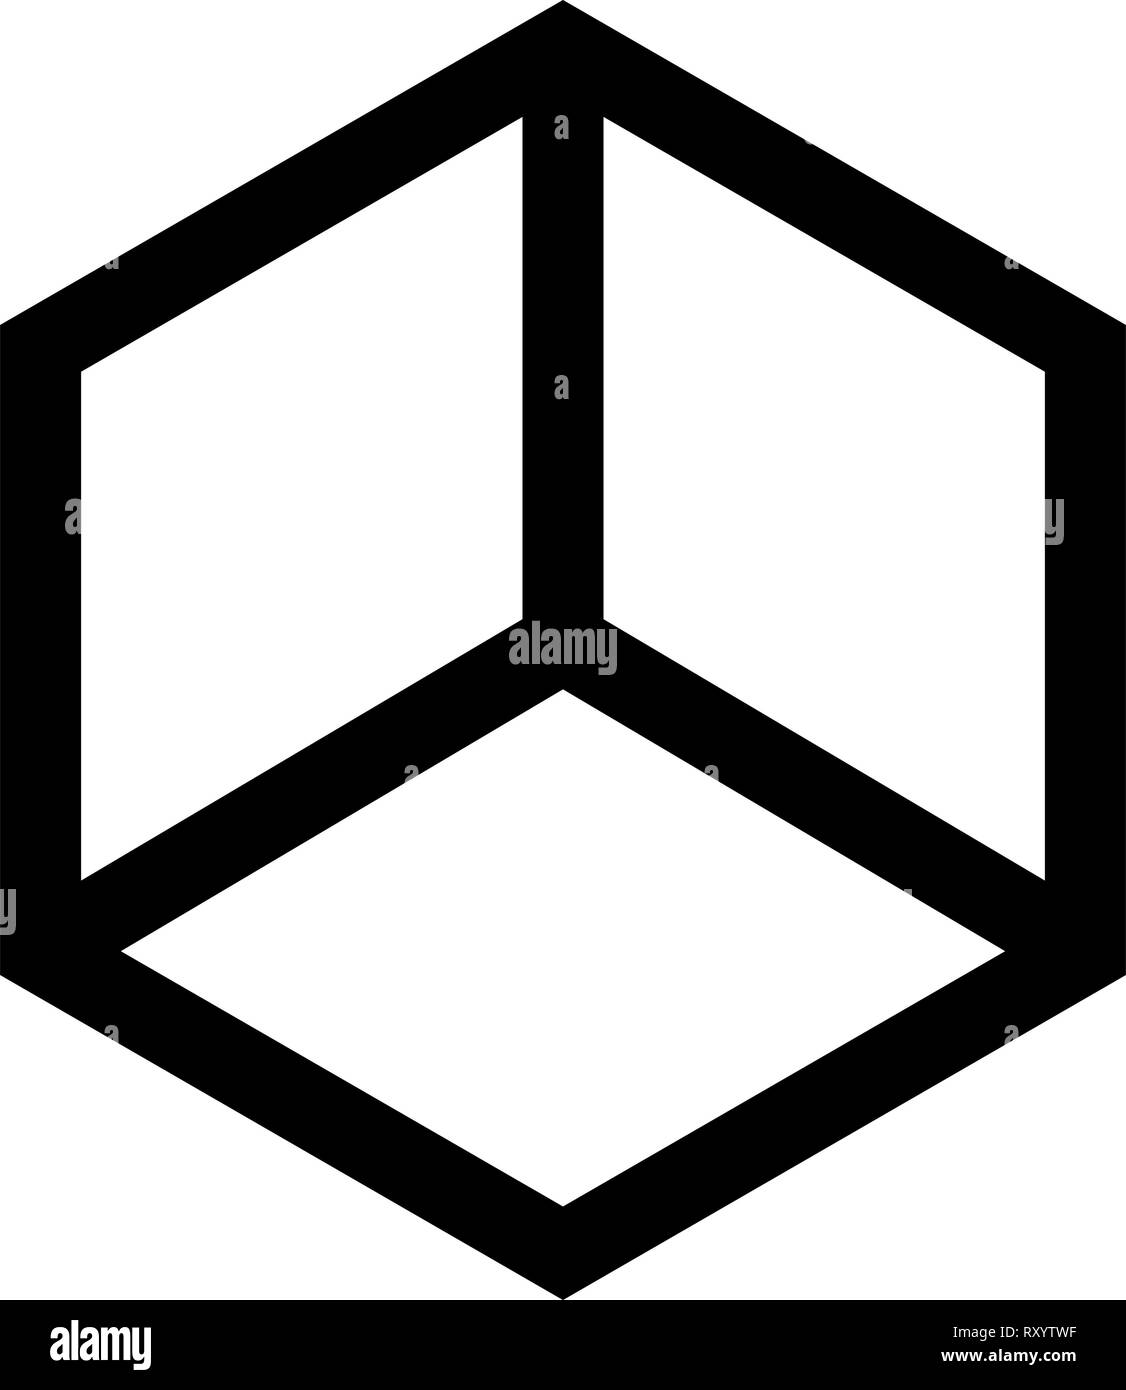 Abstrakte Würfelform Hexagon, Symbol, Farbe schwarz Vector Illustration Flat Style simple Image Stock Vektor